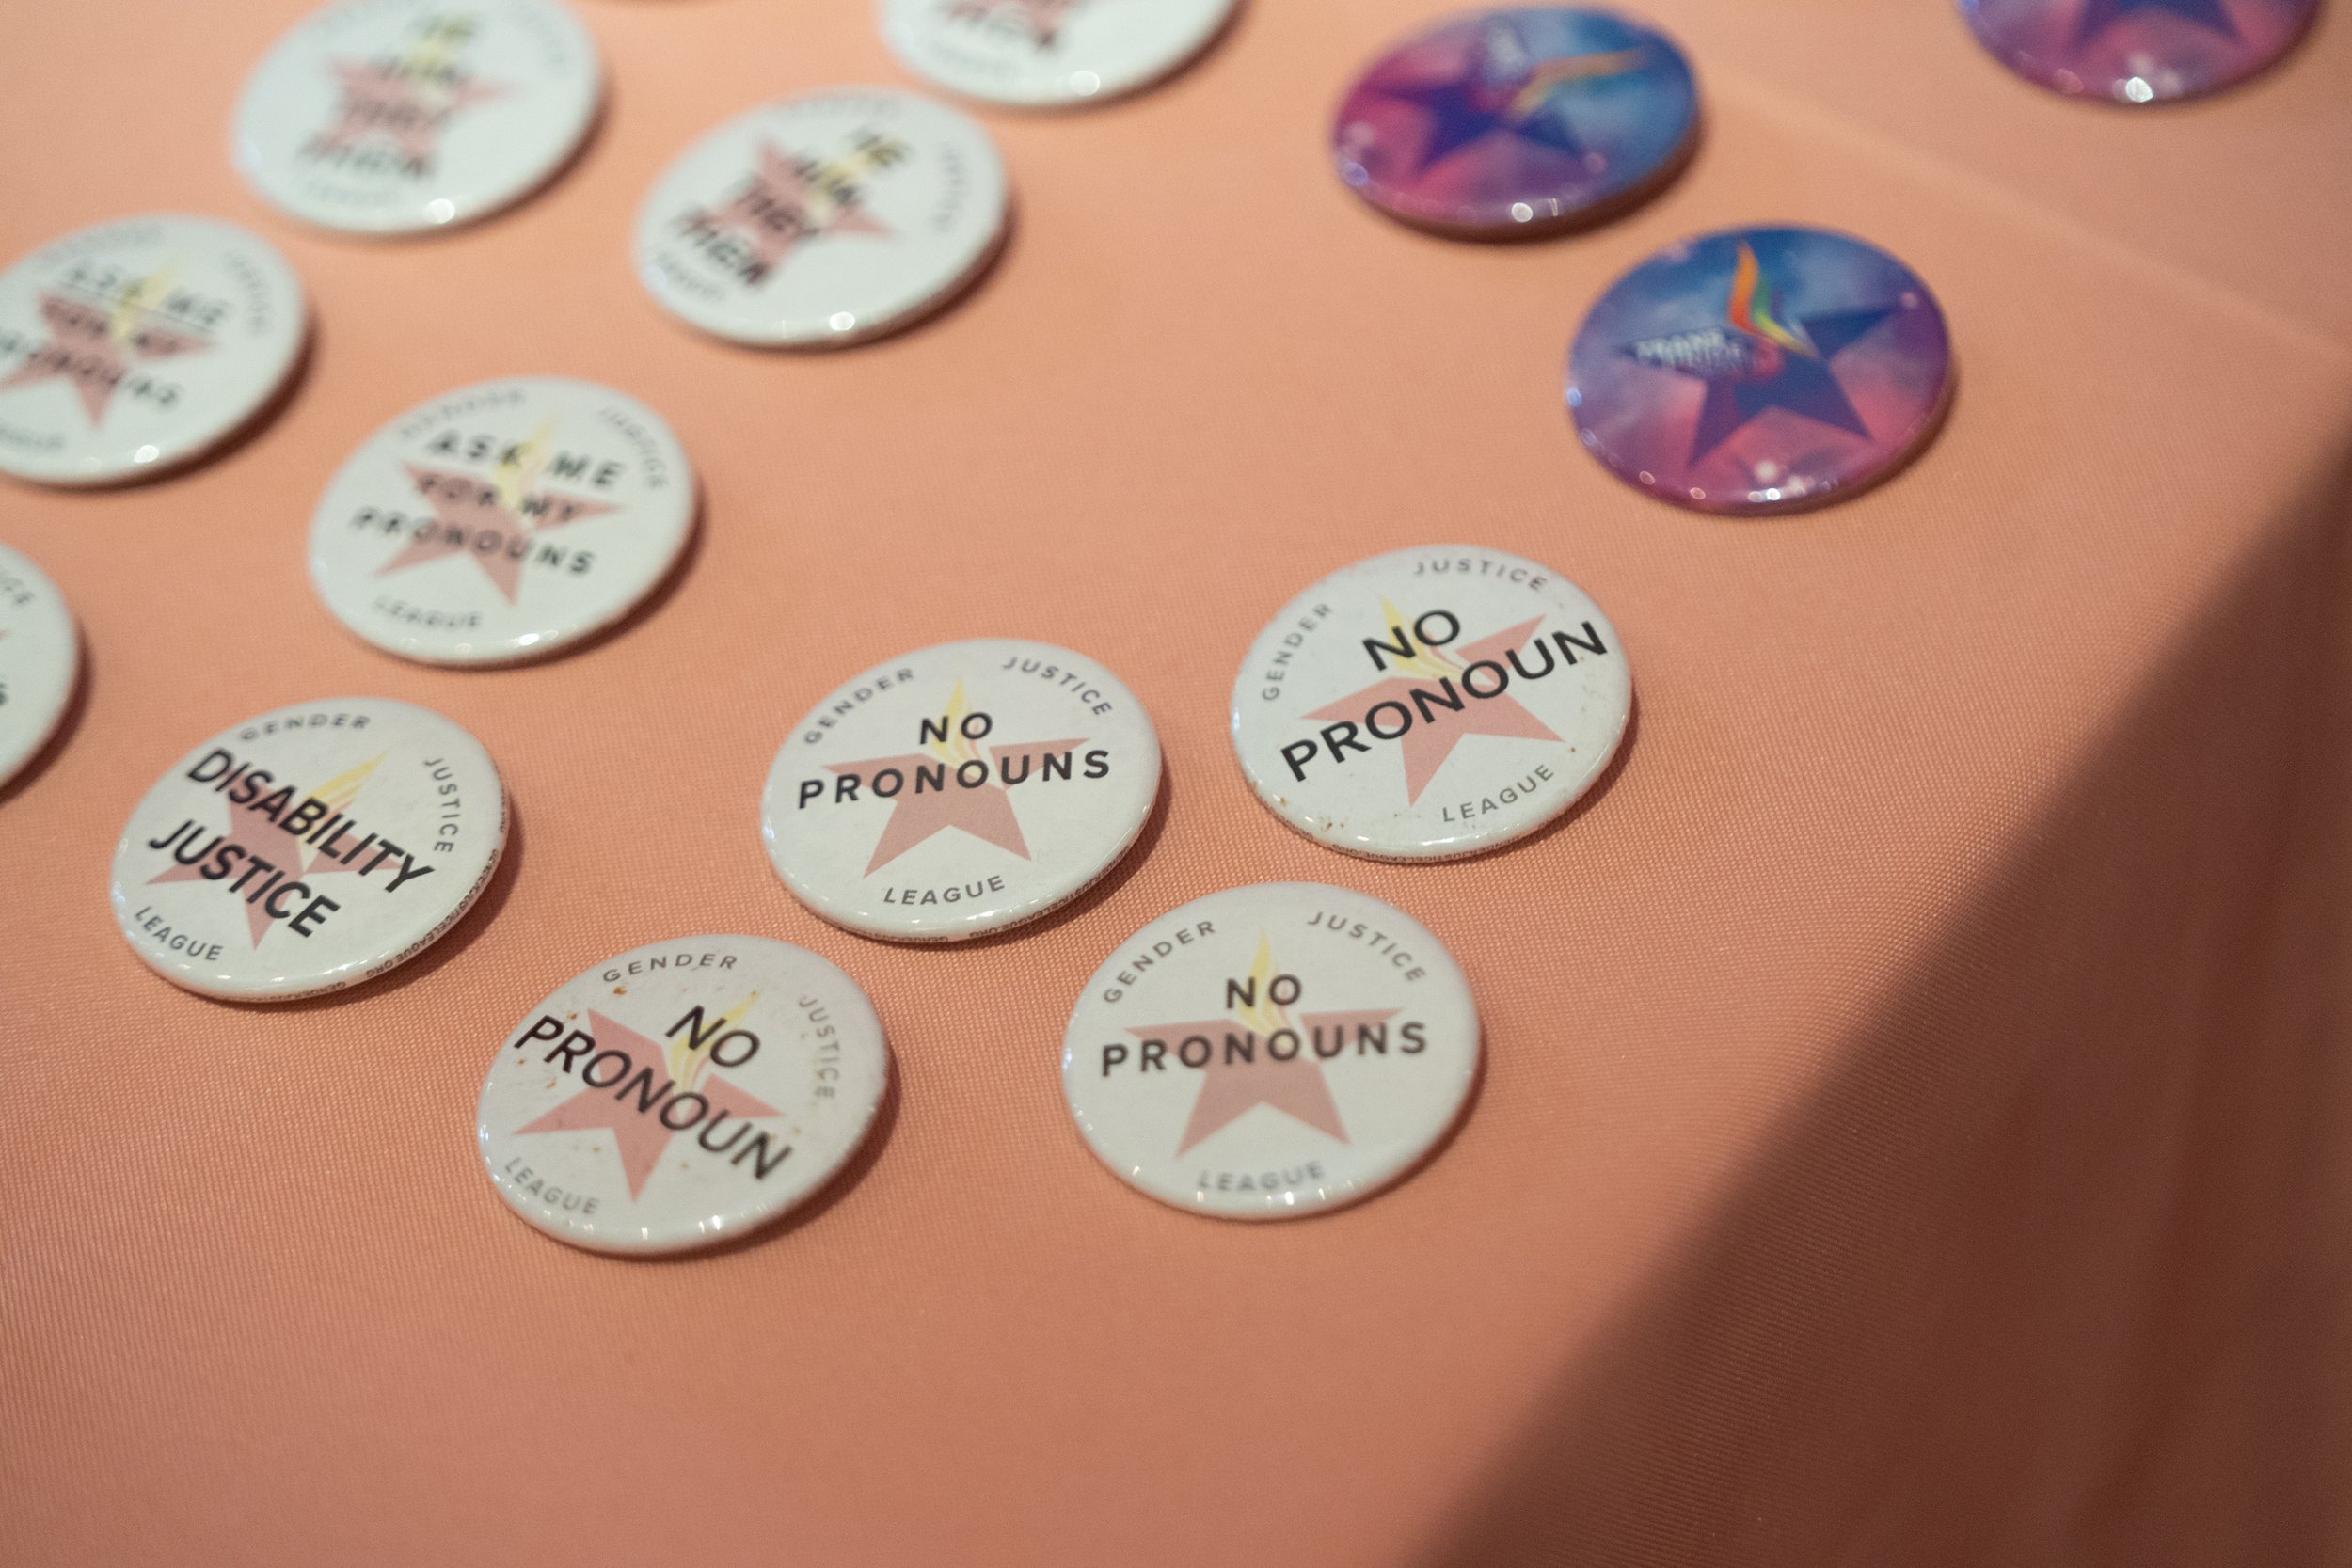  A close up of pronoun pins, the most visible option says “no pronouns” 